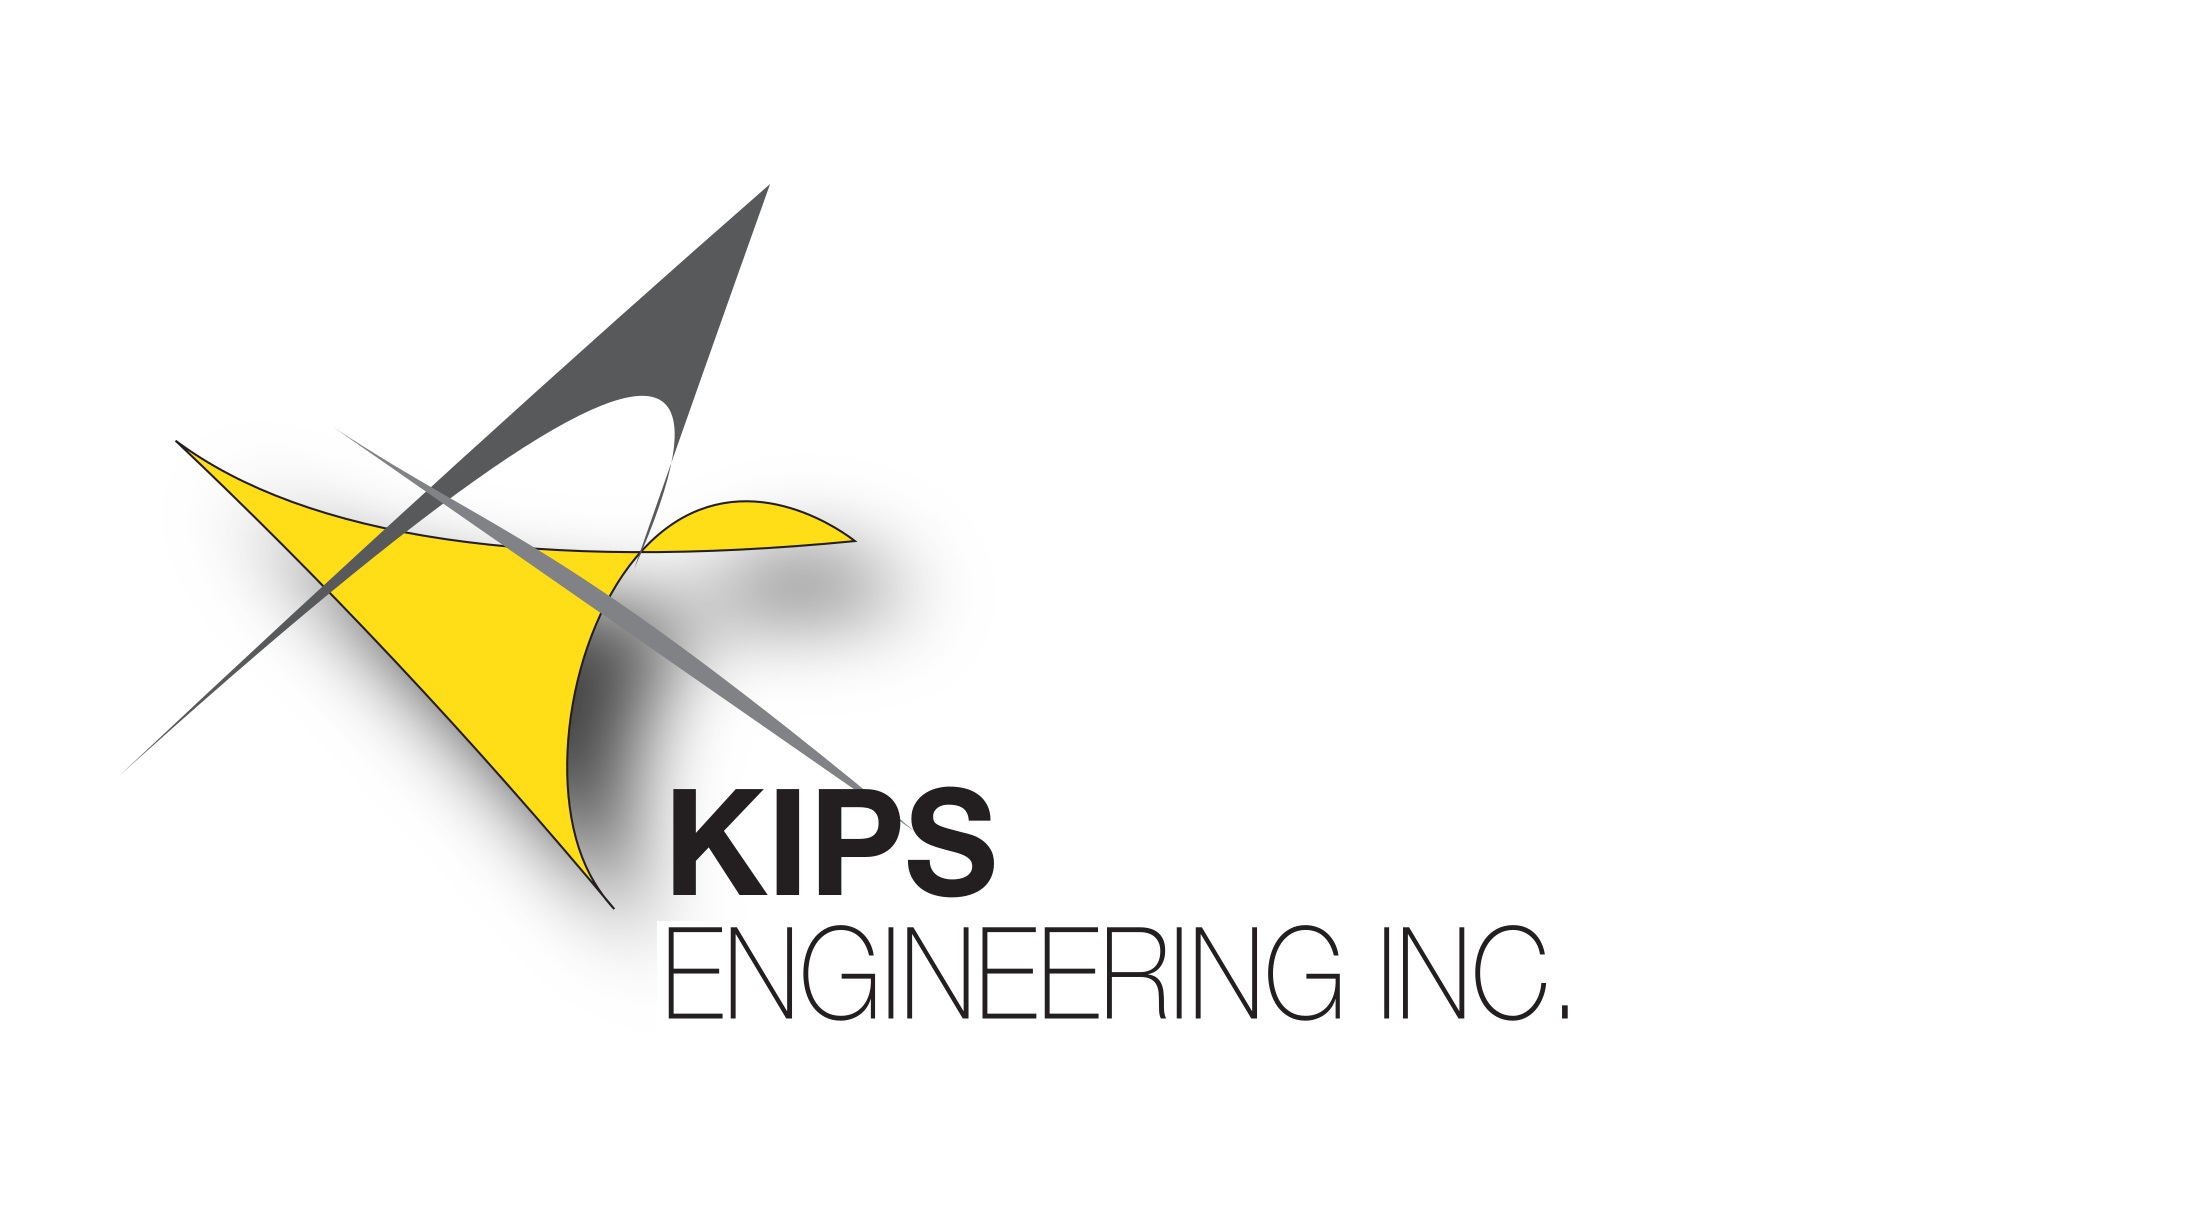 KIPS Engineering